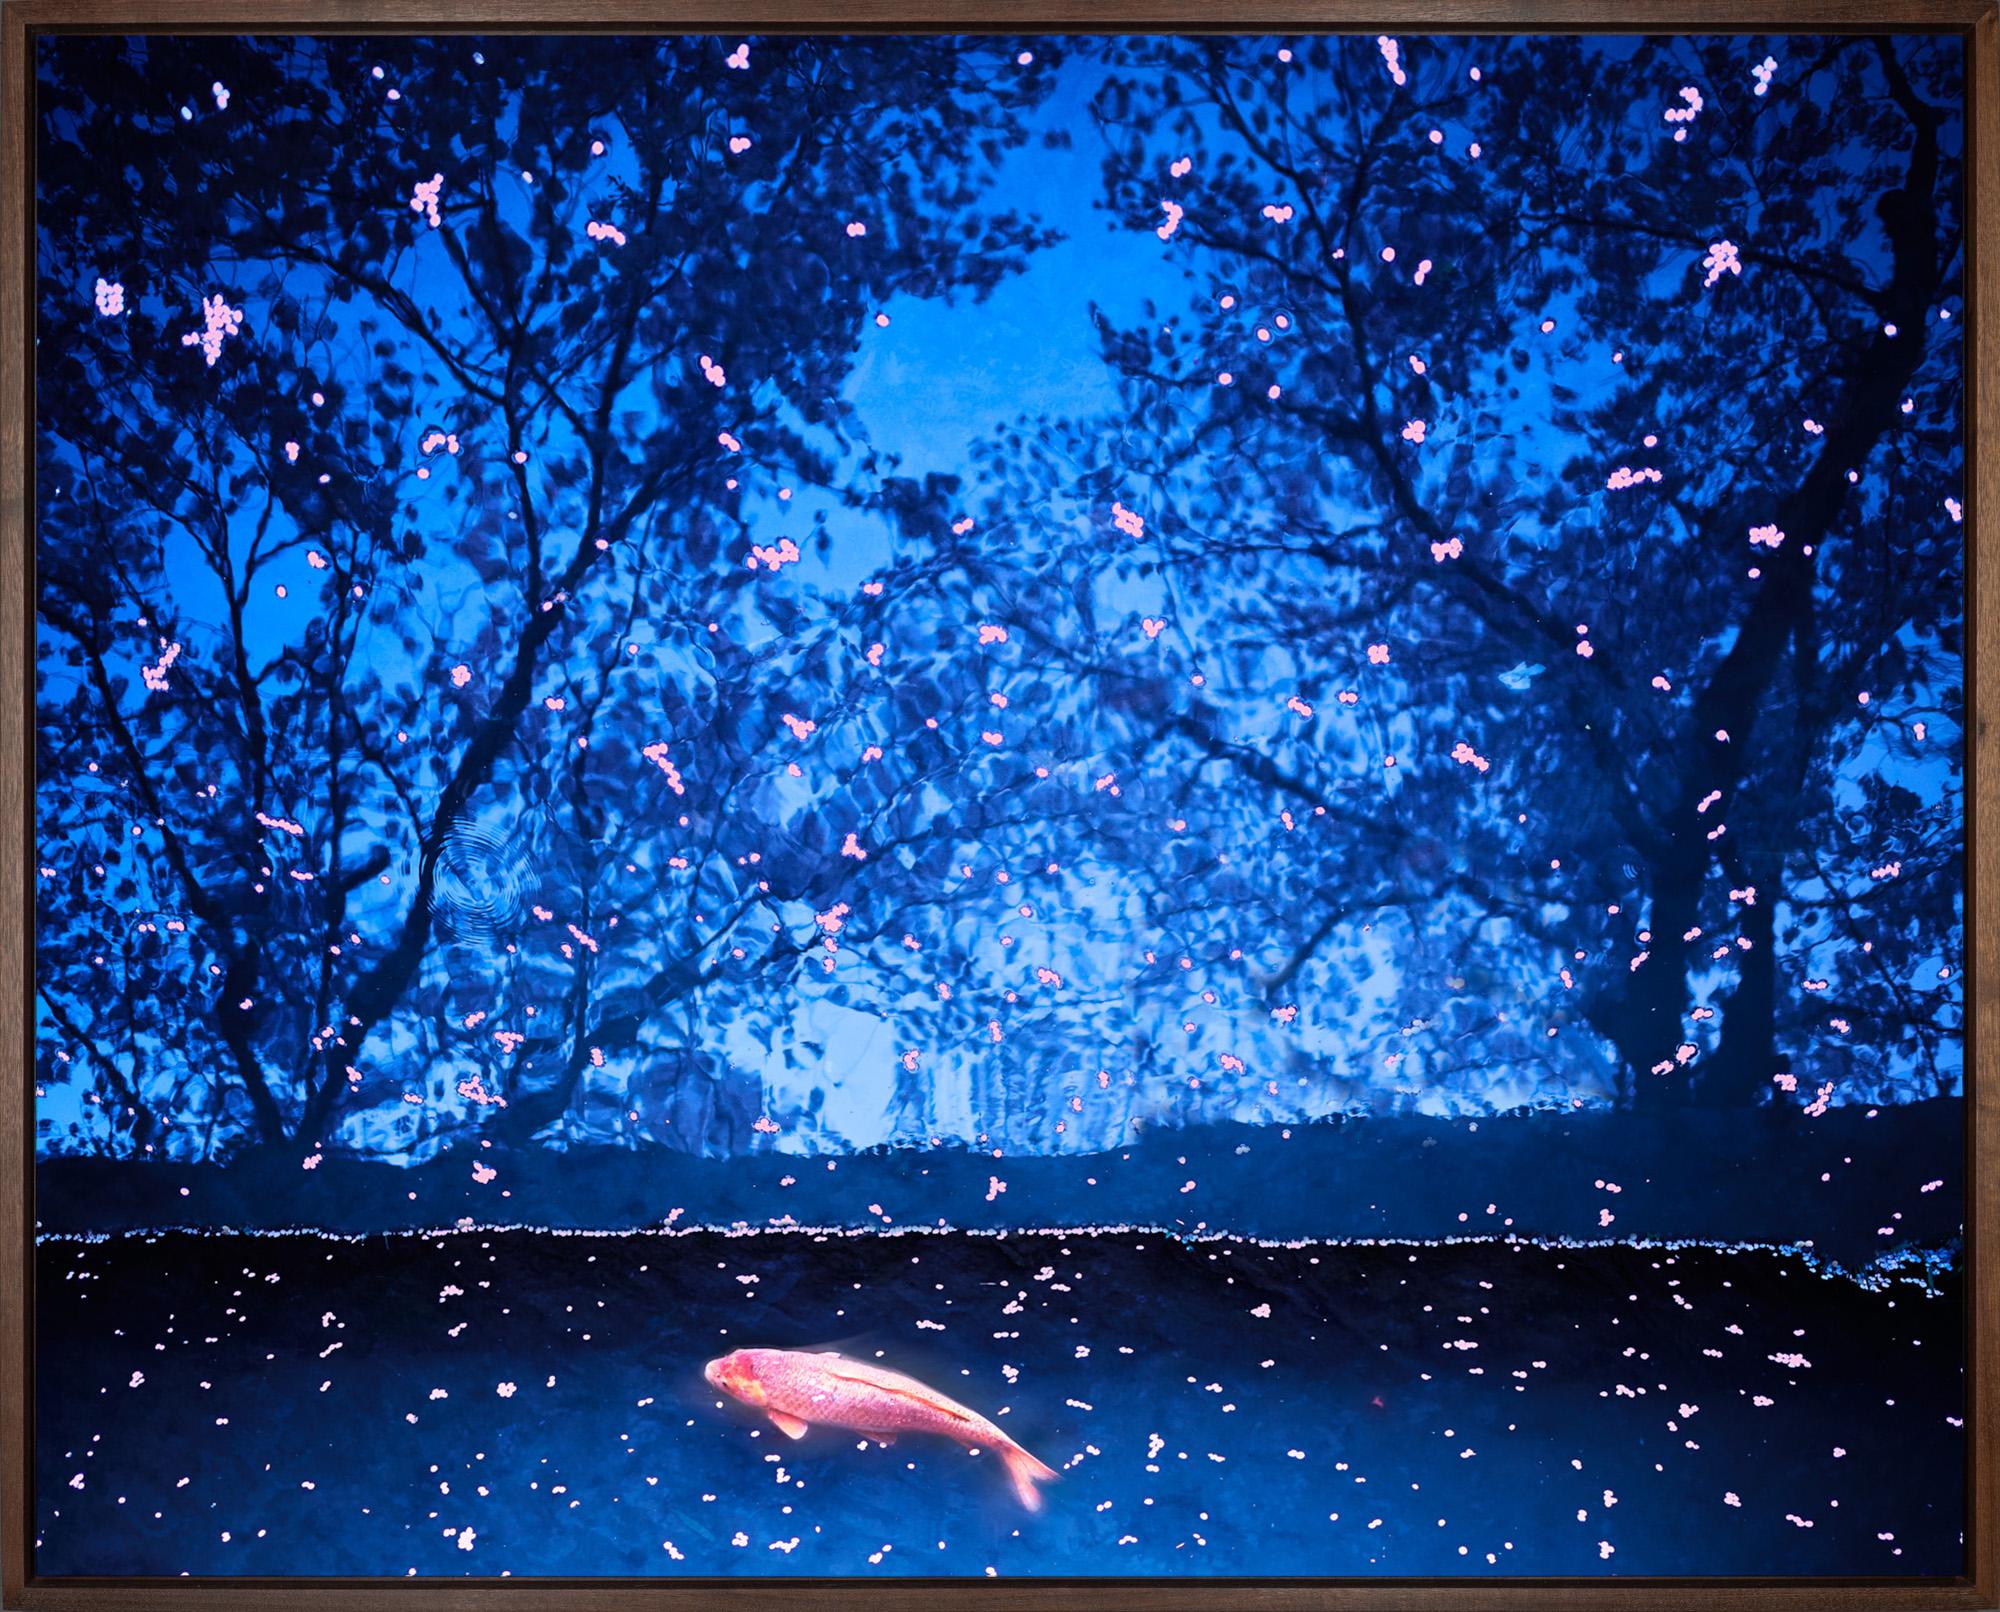 David Burdeny Landscape Photograph - "Koi and Sakura Petals, Kyoto, Japan" Contemporary Framed Photograph on Aluminum